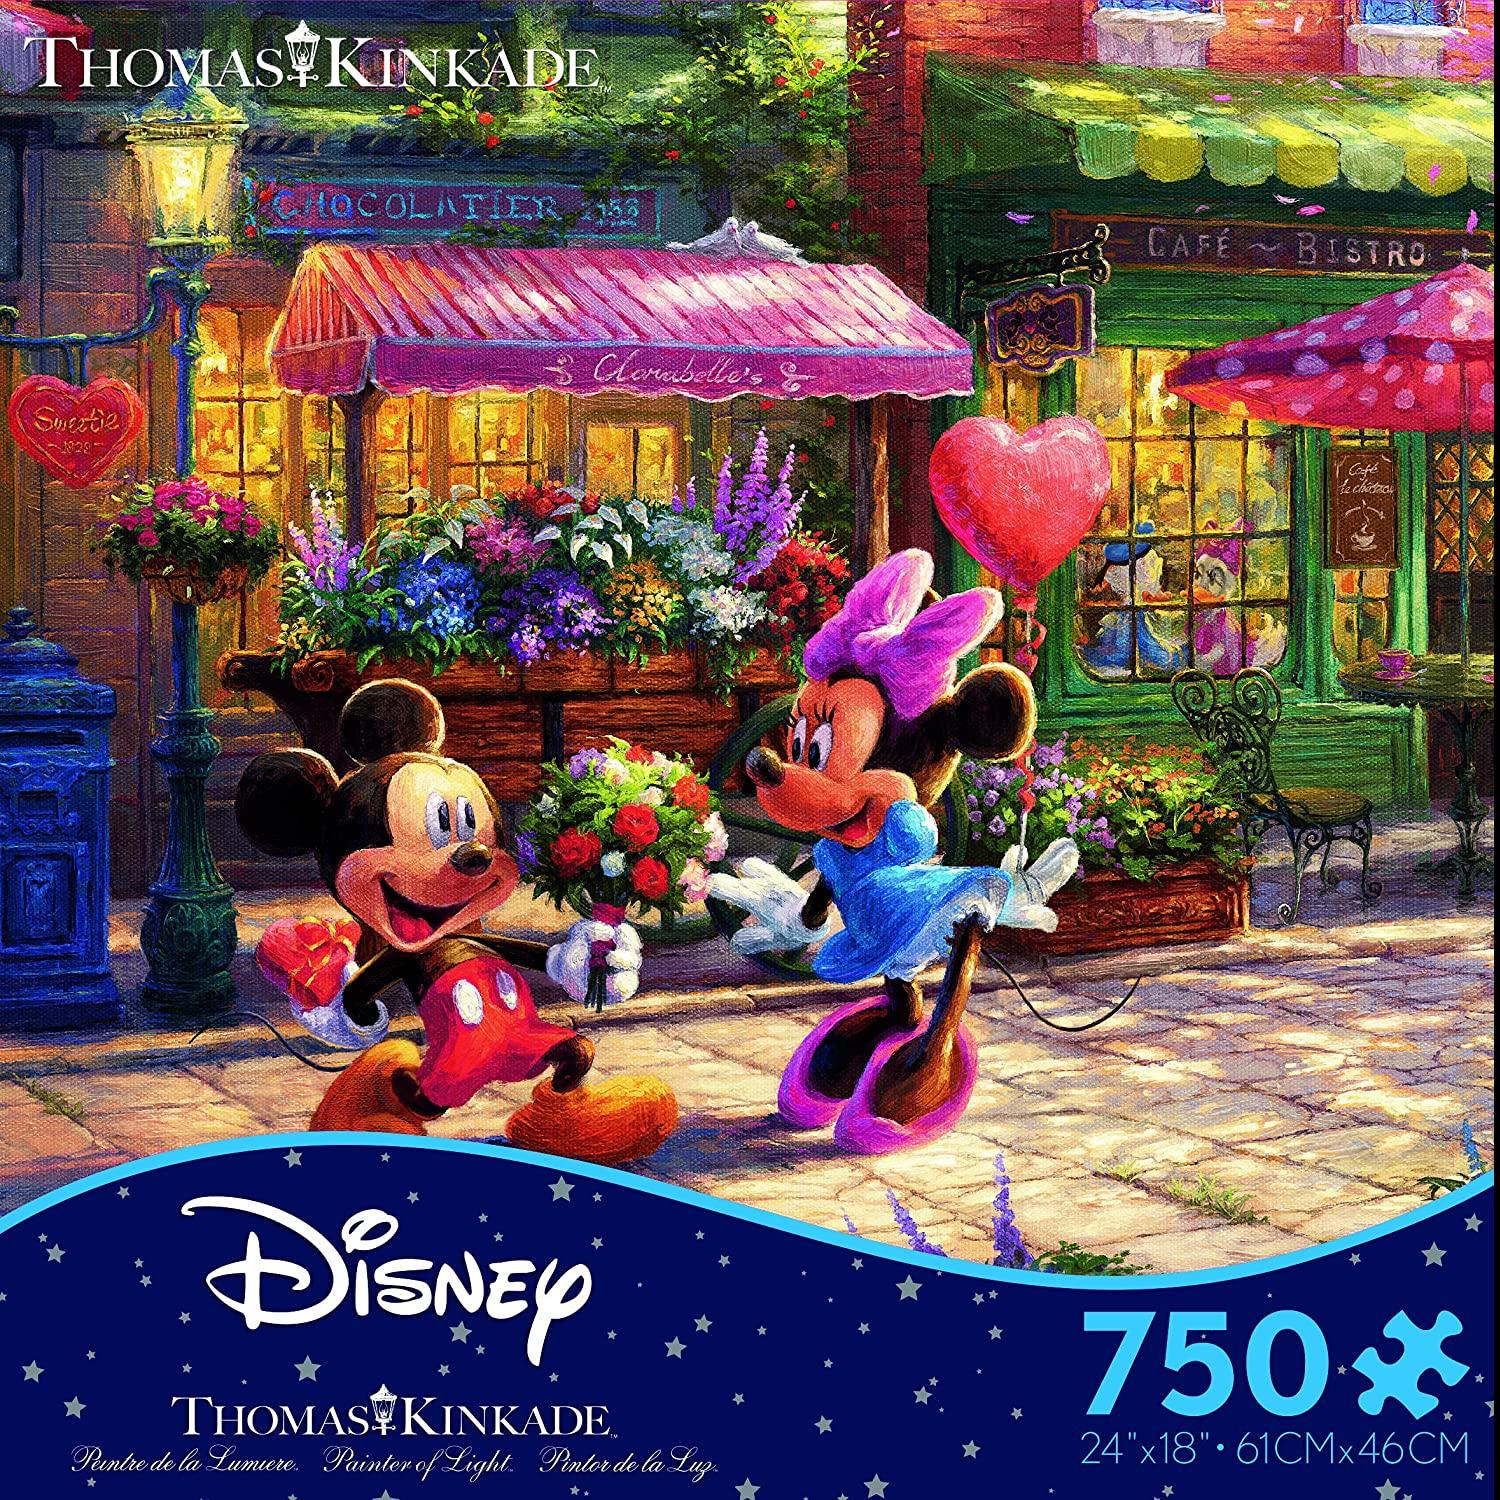 750-Piece Ceaco Thomas Kinkade Mickey and Minnie Jigsaw Puzzle for $6.75